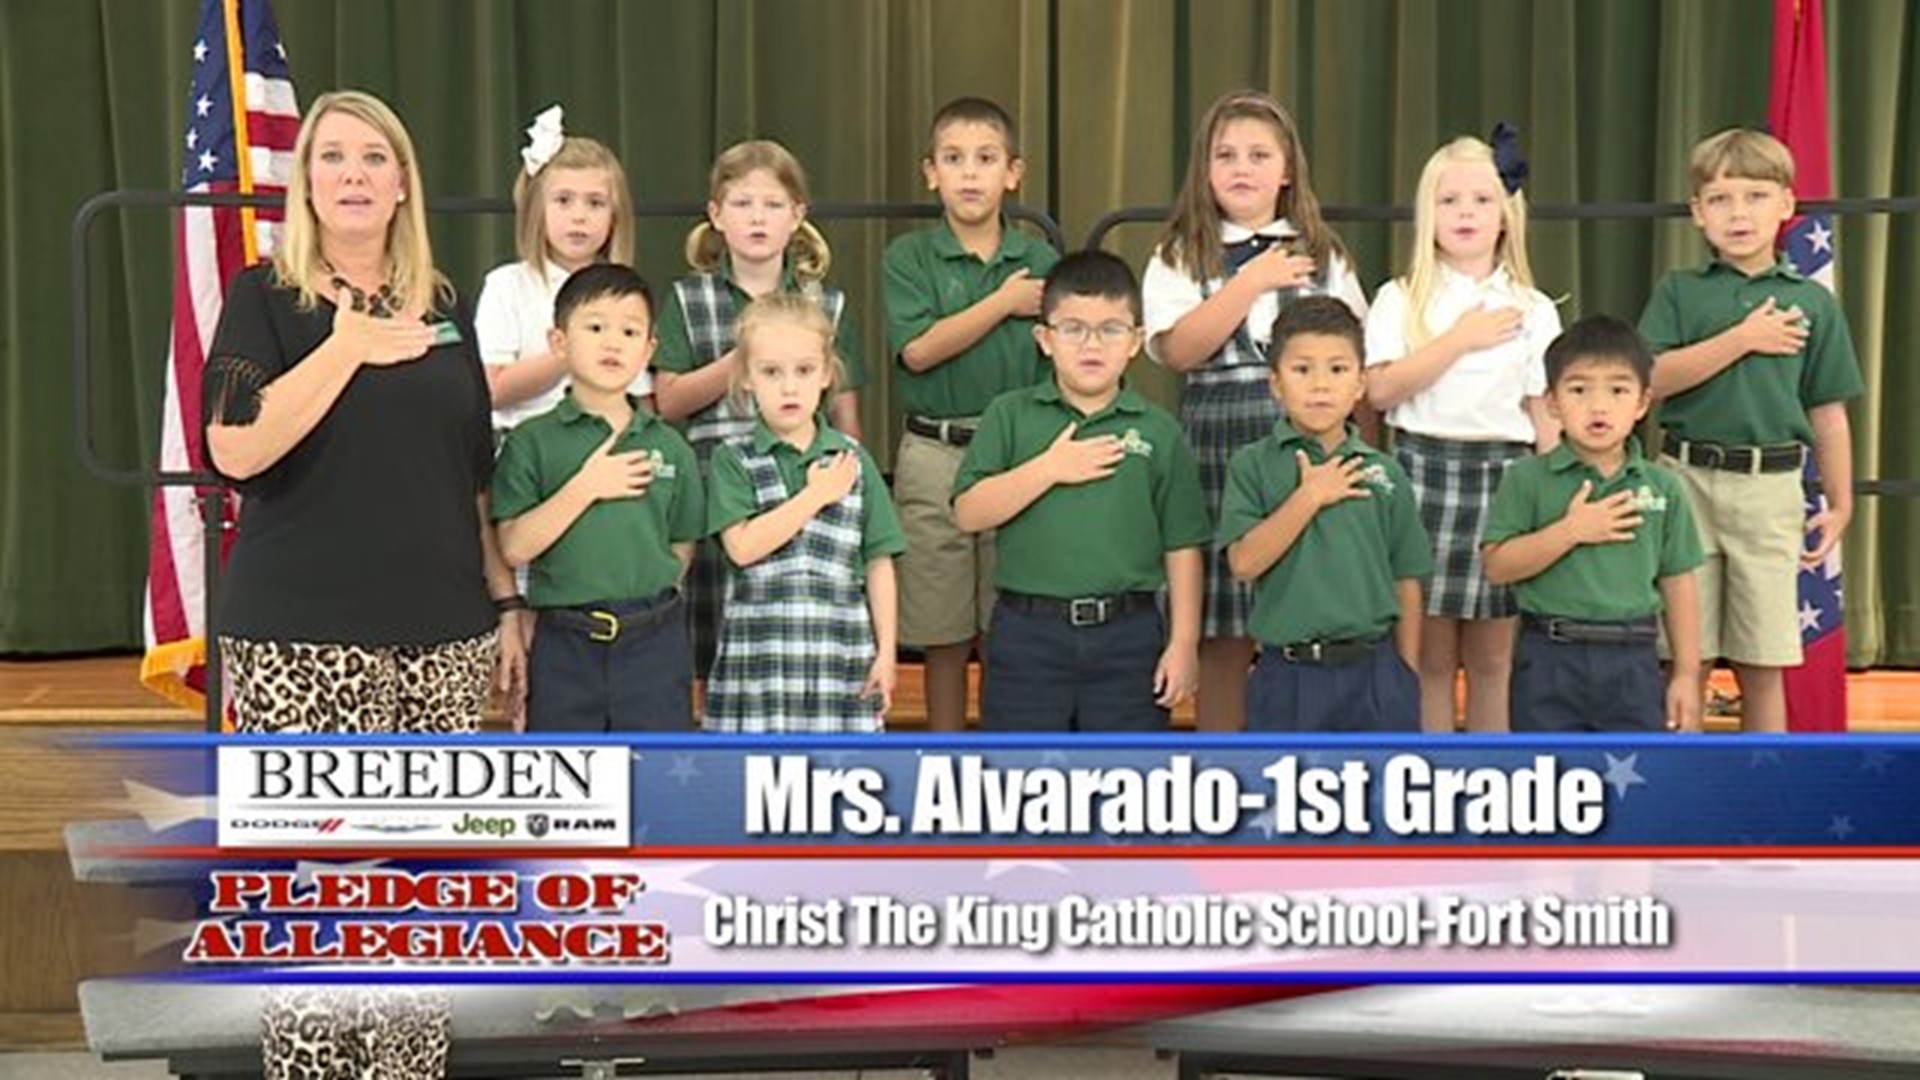 Christ the King Catholic School - Fort Smith - Mrs. Alvarado - 1st Grade